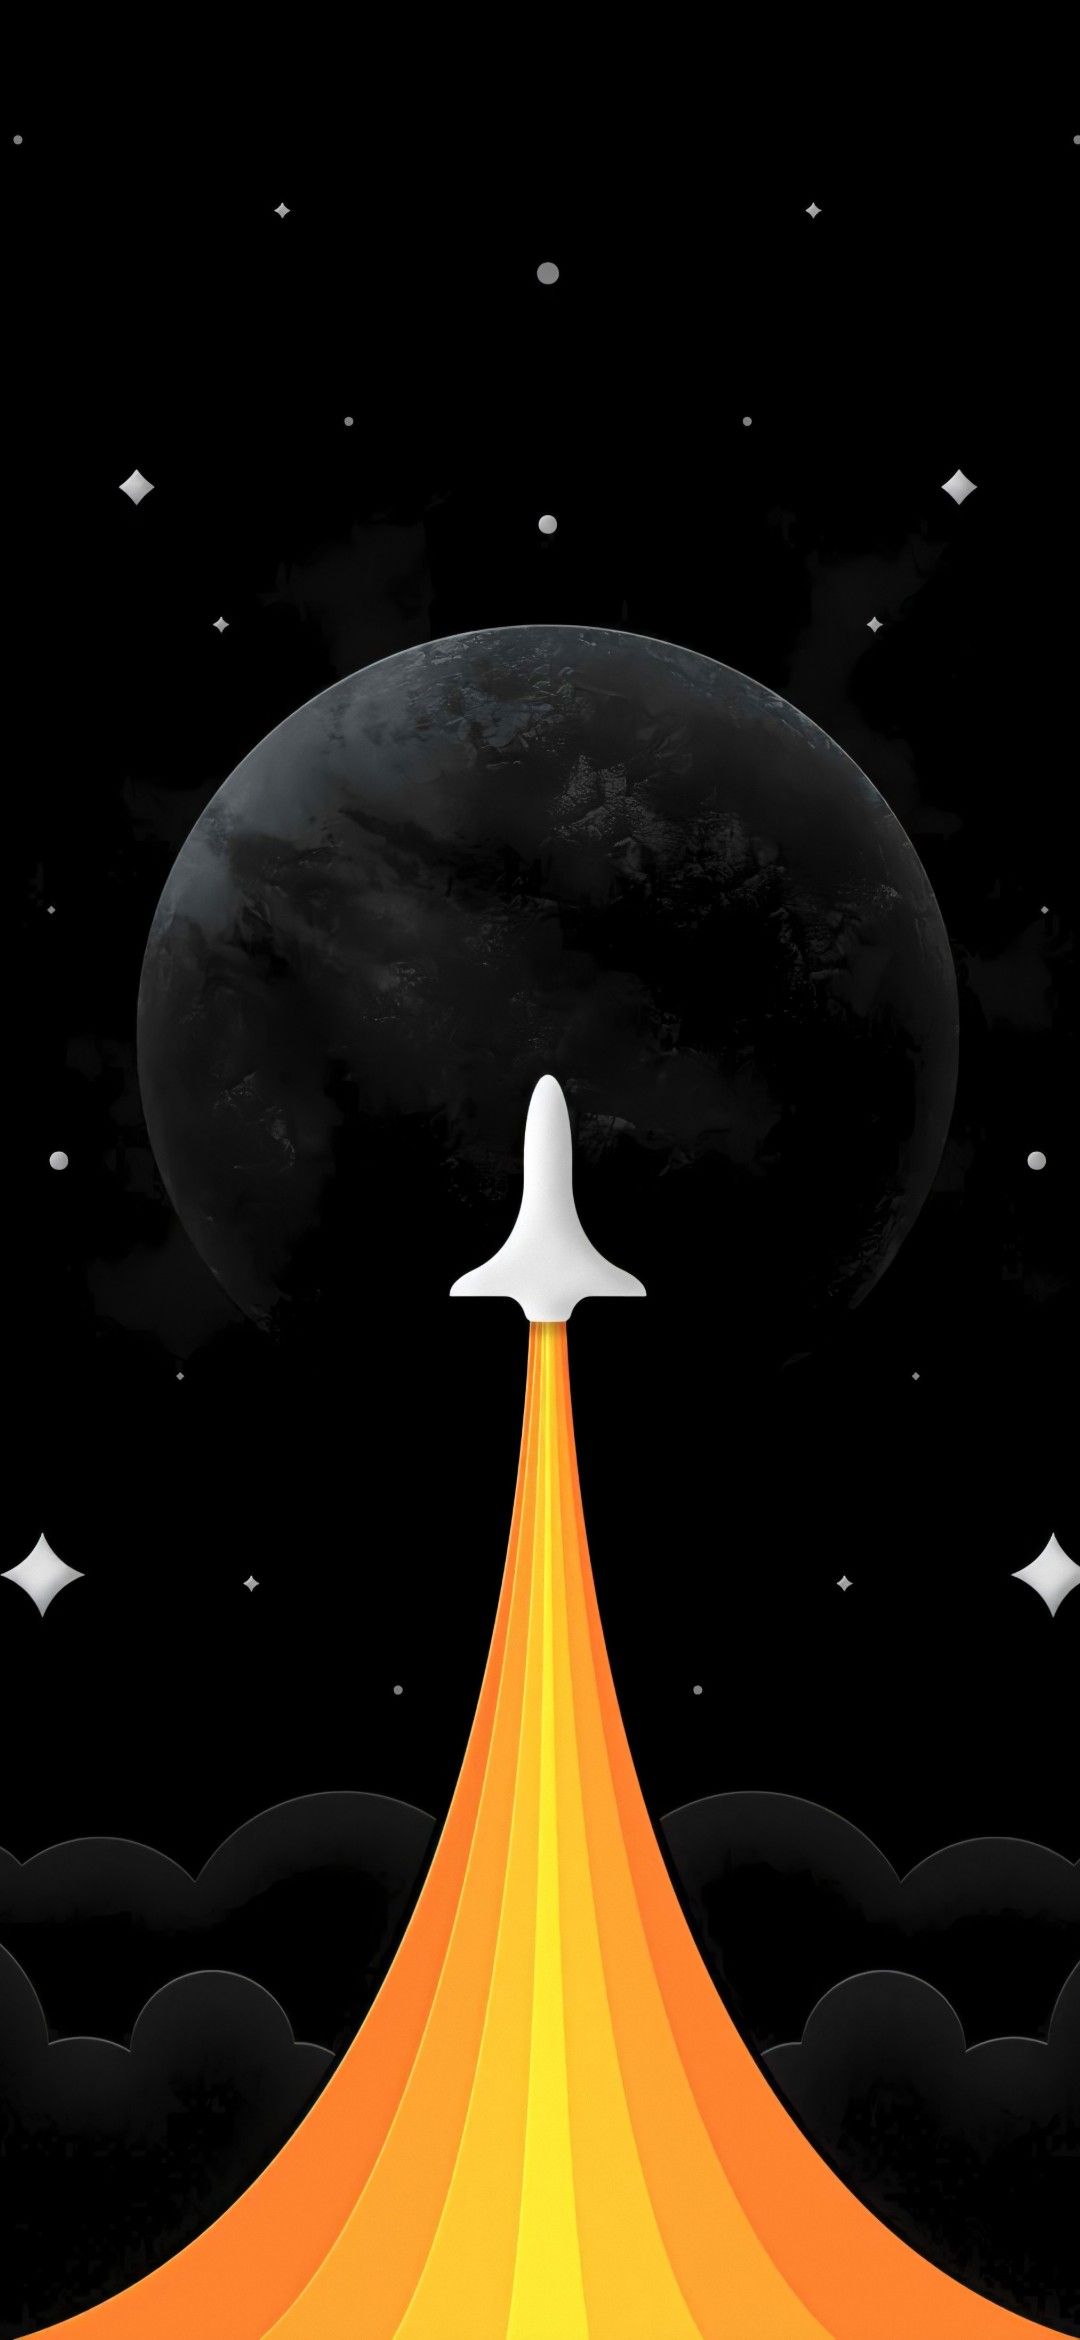 Best iPhone Space Rocket Minimal Wallpaper Download Free ⋆ Traxzee